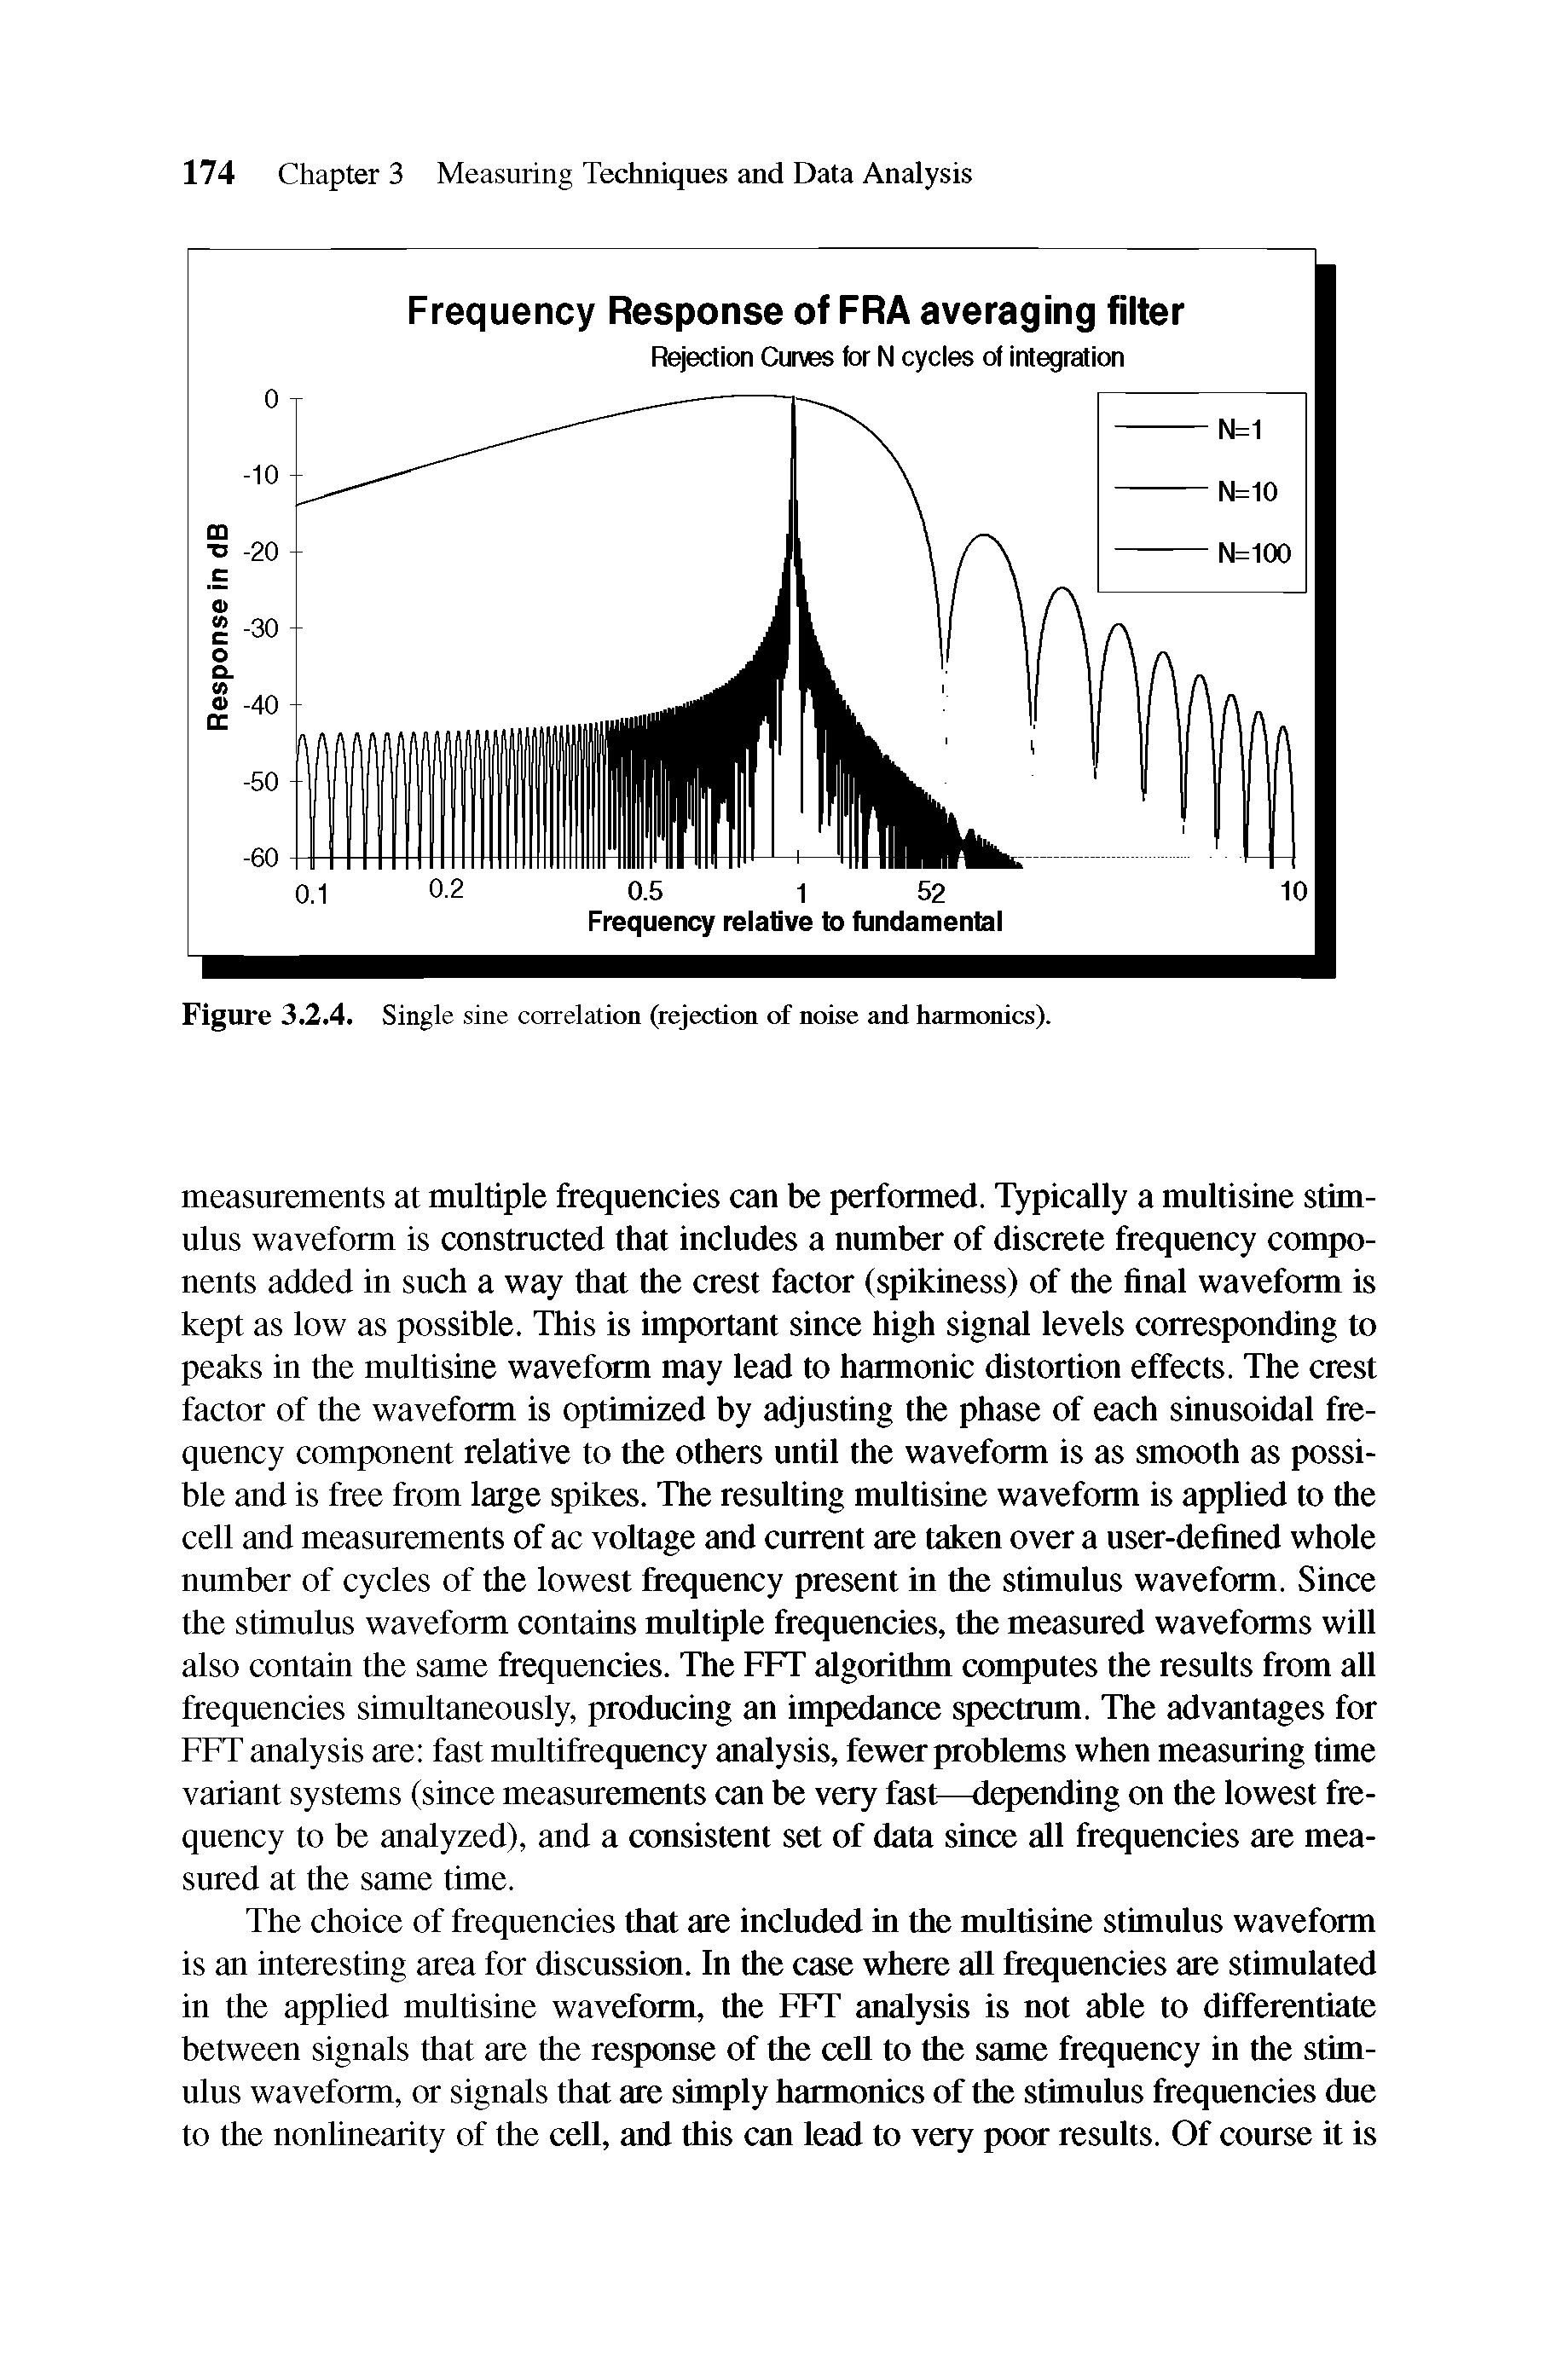 Figure 3.2.4. Single sine correlation (rejection of noise and harmonics).